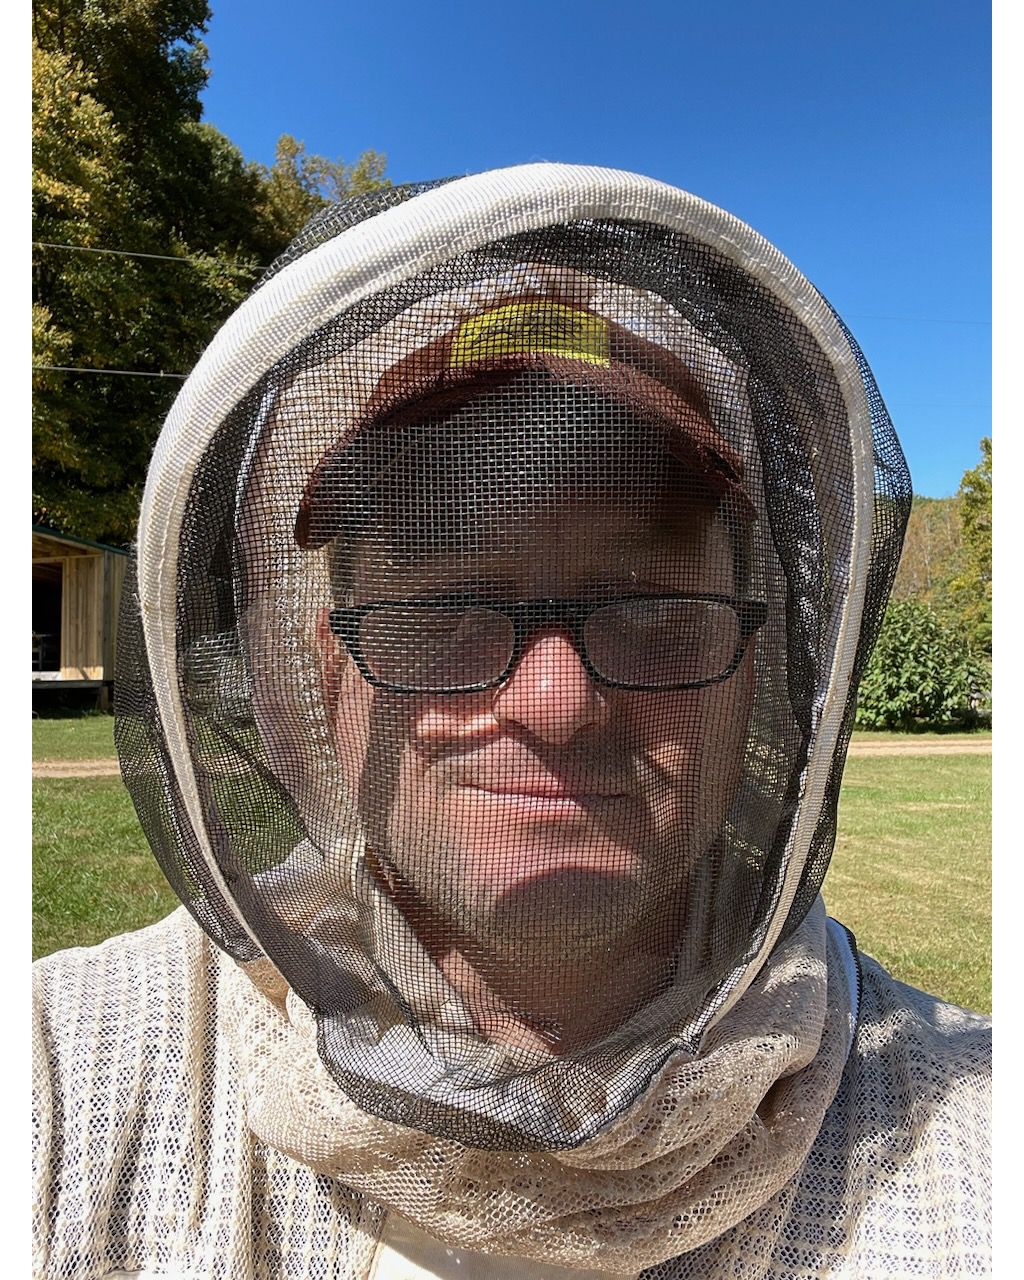 How Beekeeping Can Make Work-life Balance Sweeter